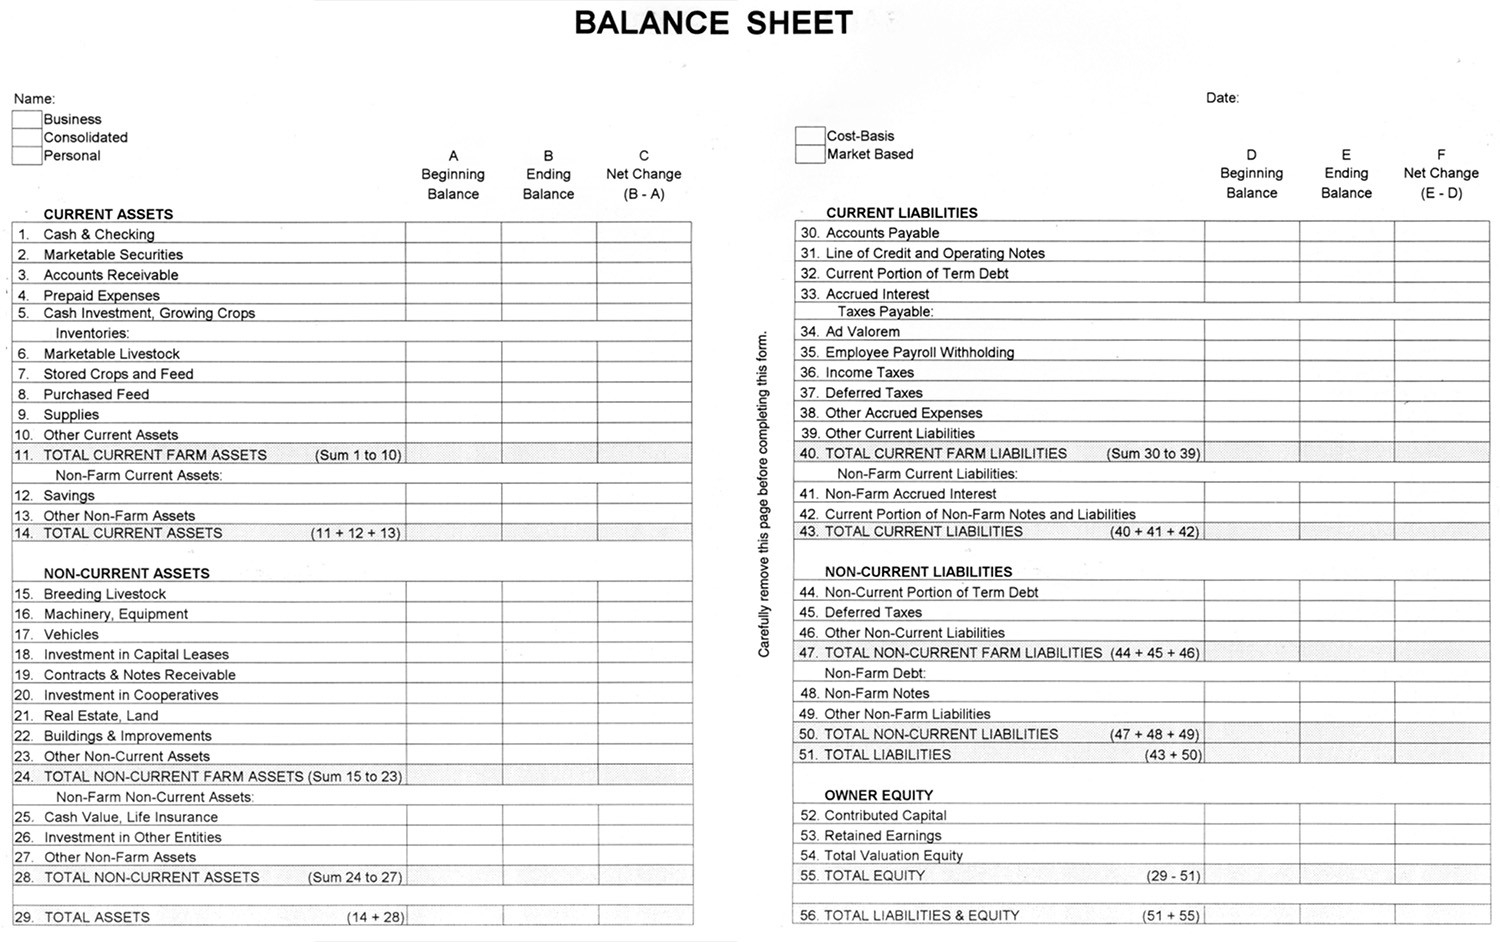 Agec752 Developing A Balance Sheet » Osu Fact Sheets